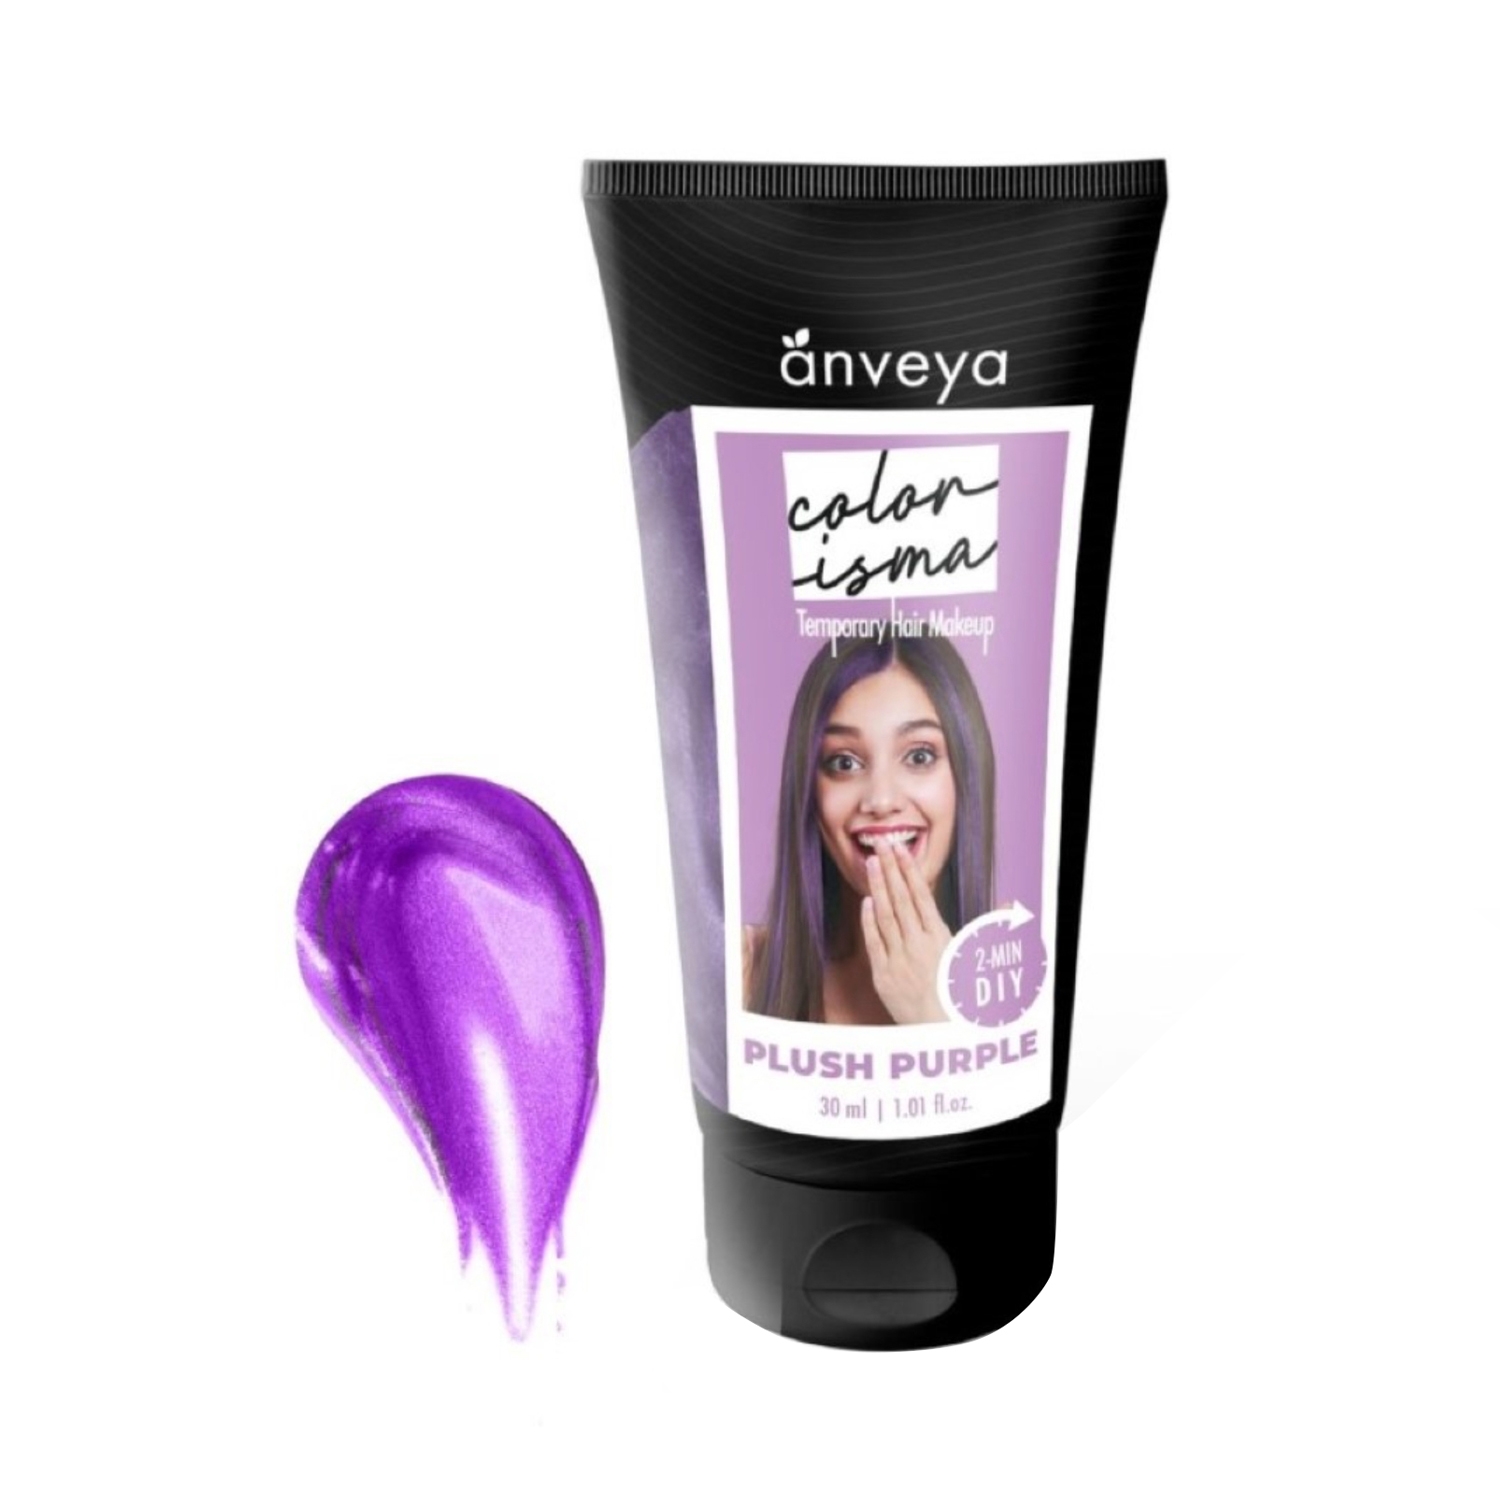 Anveya | Anveya Colorisma Hair Color Makeup - Plush Purple (30ml)